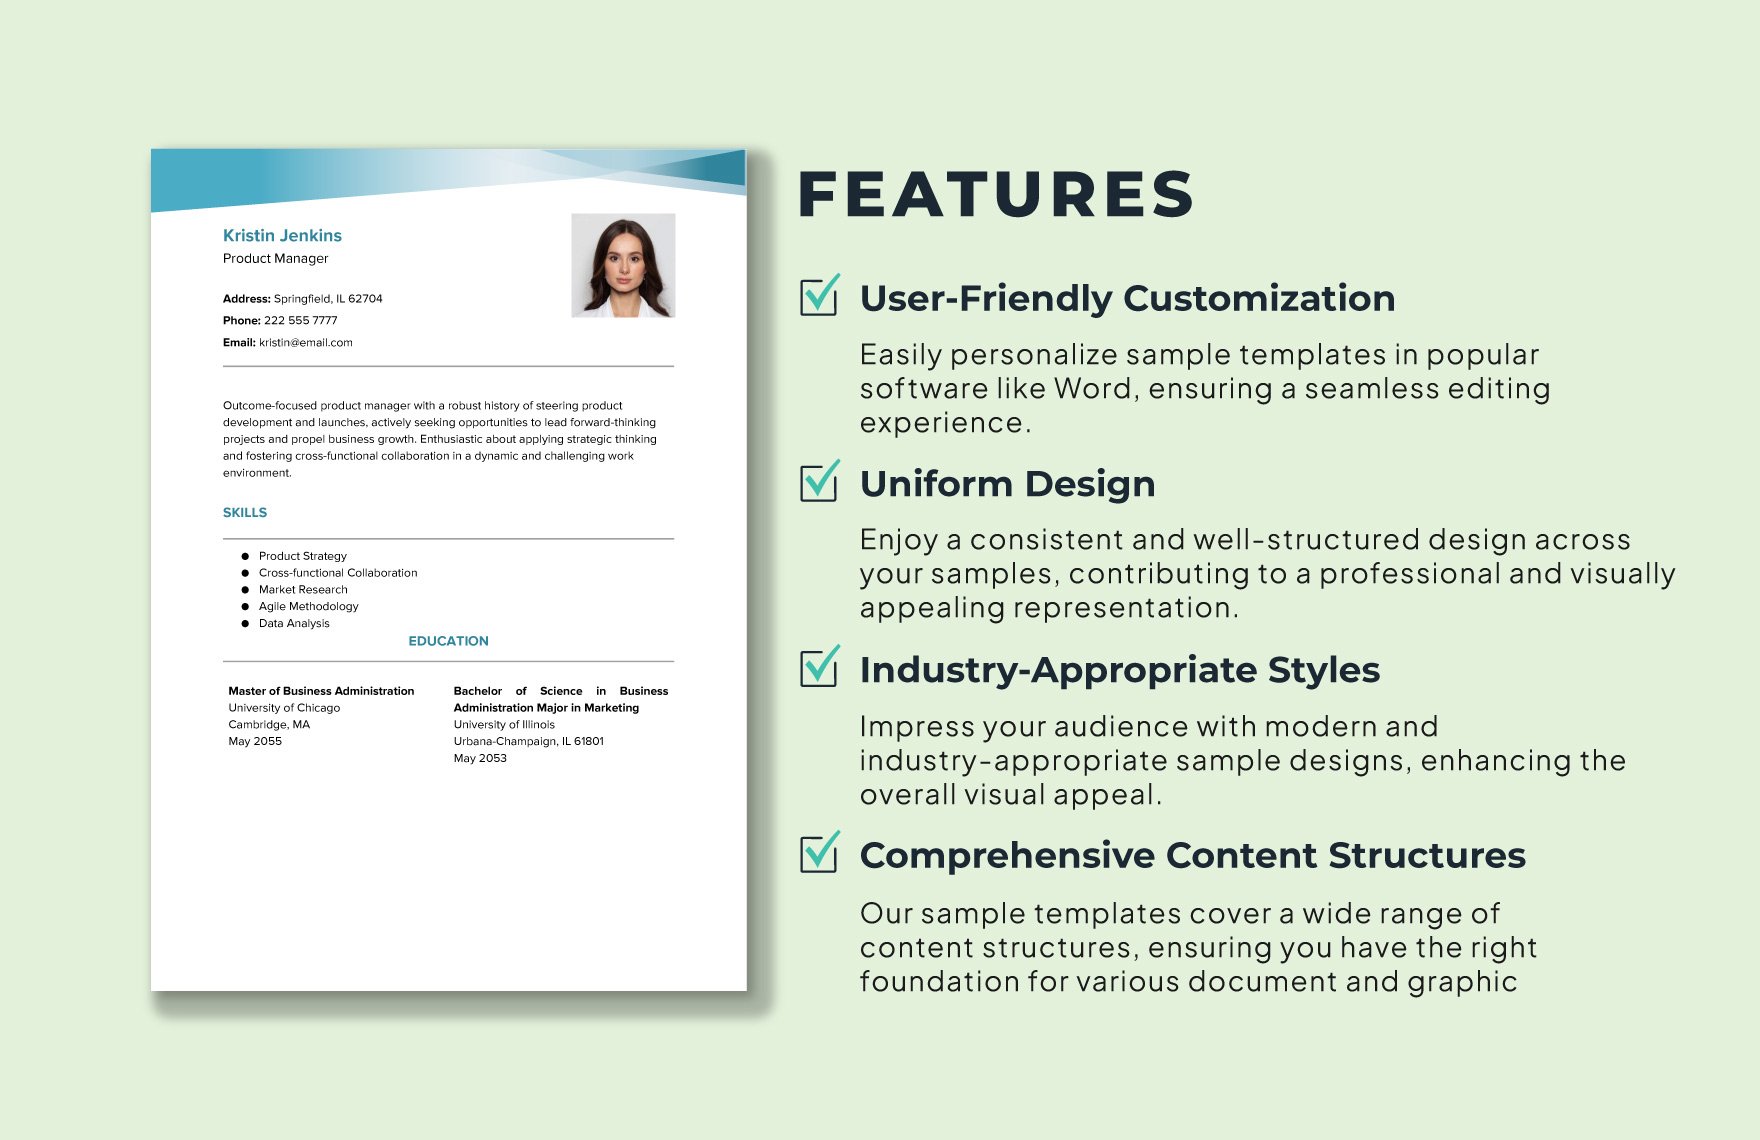 Sample Professional CV Template